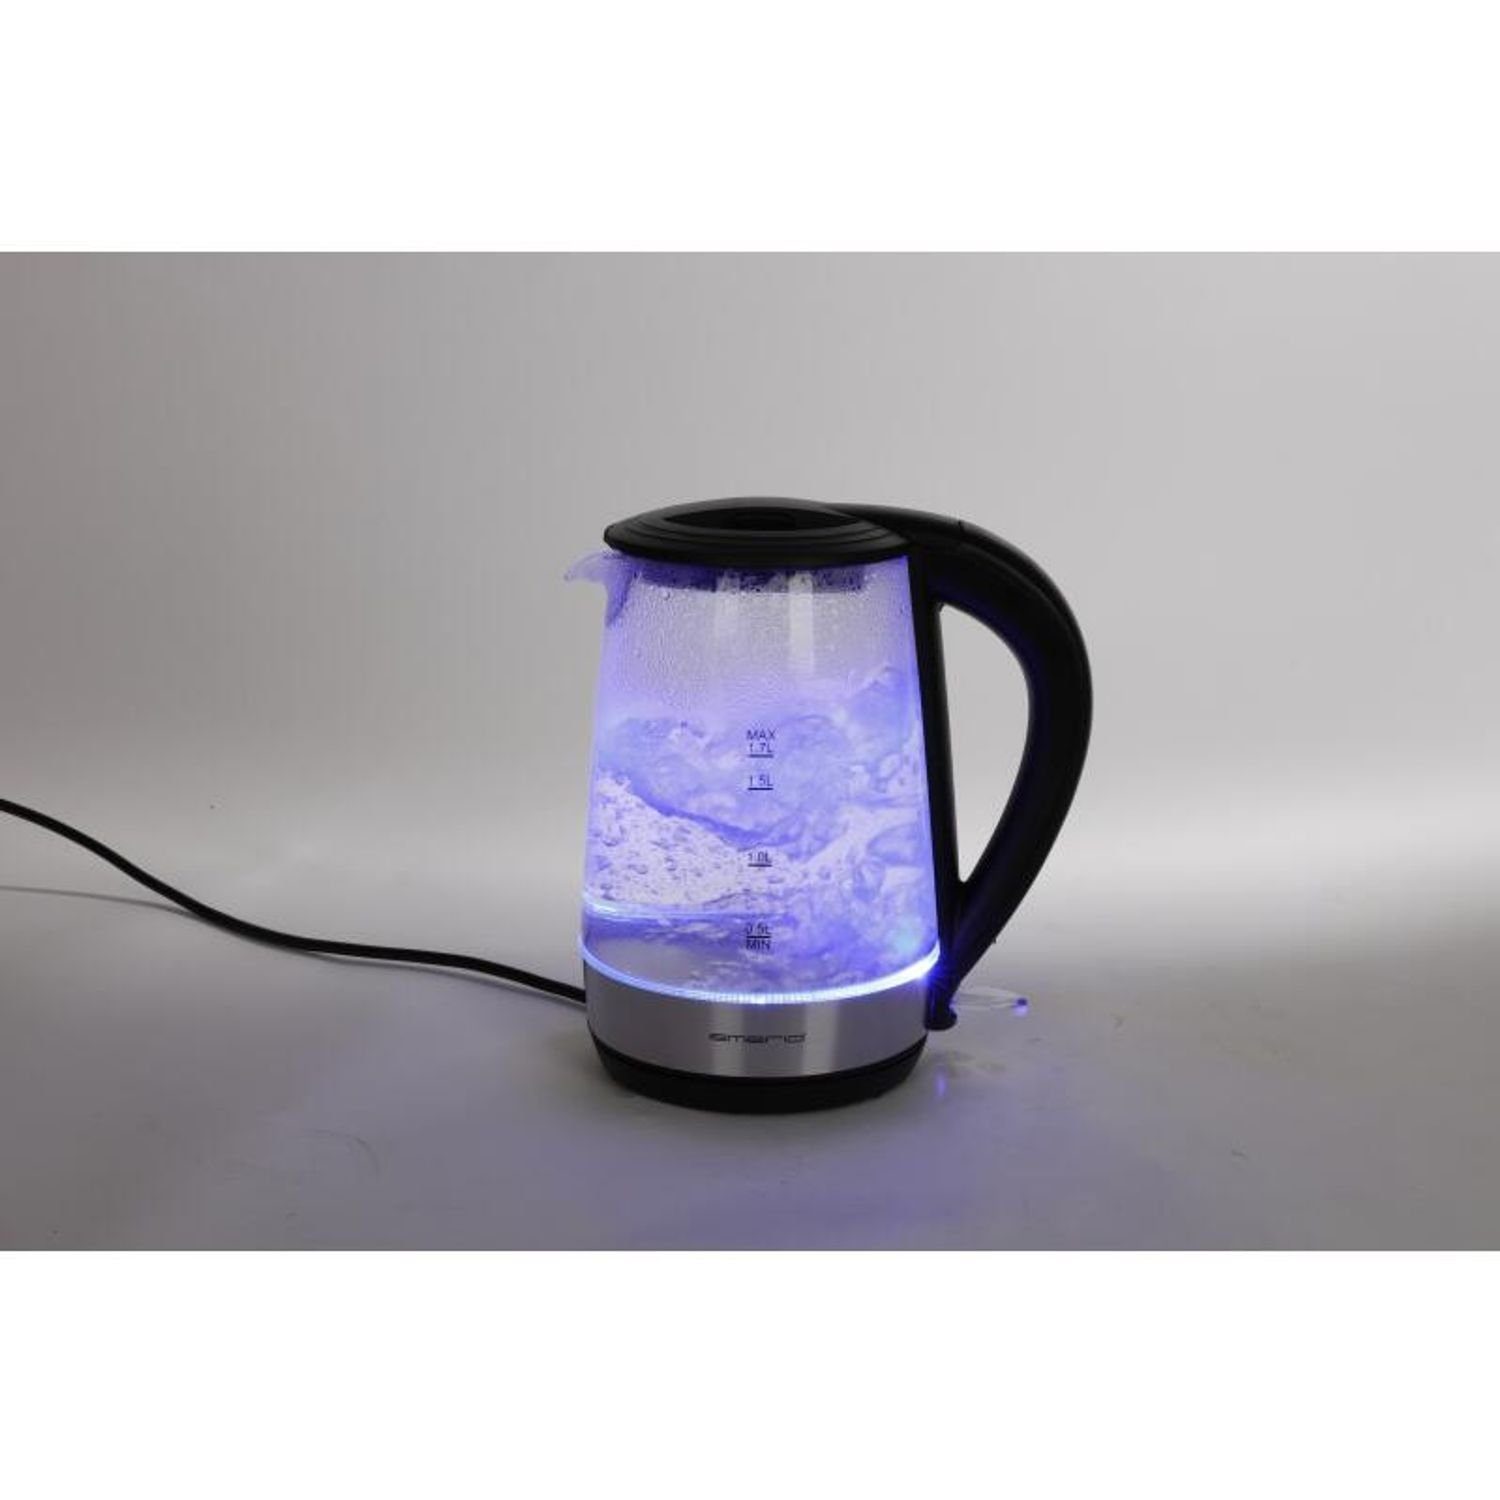 Emerio Wasserkocher Glas Wasserkocher 1,7L Tee Erwärmen Kü Beleuchtung LED Kabellos Kettle